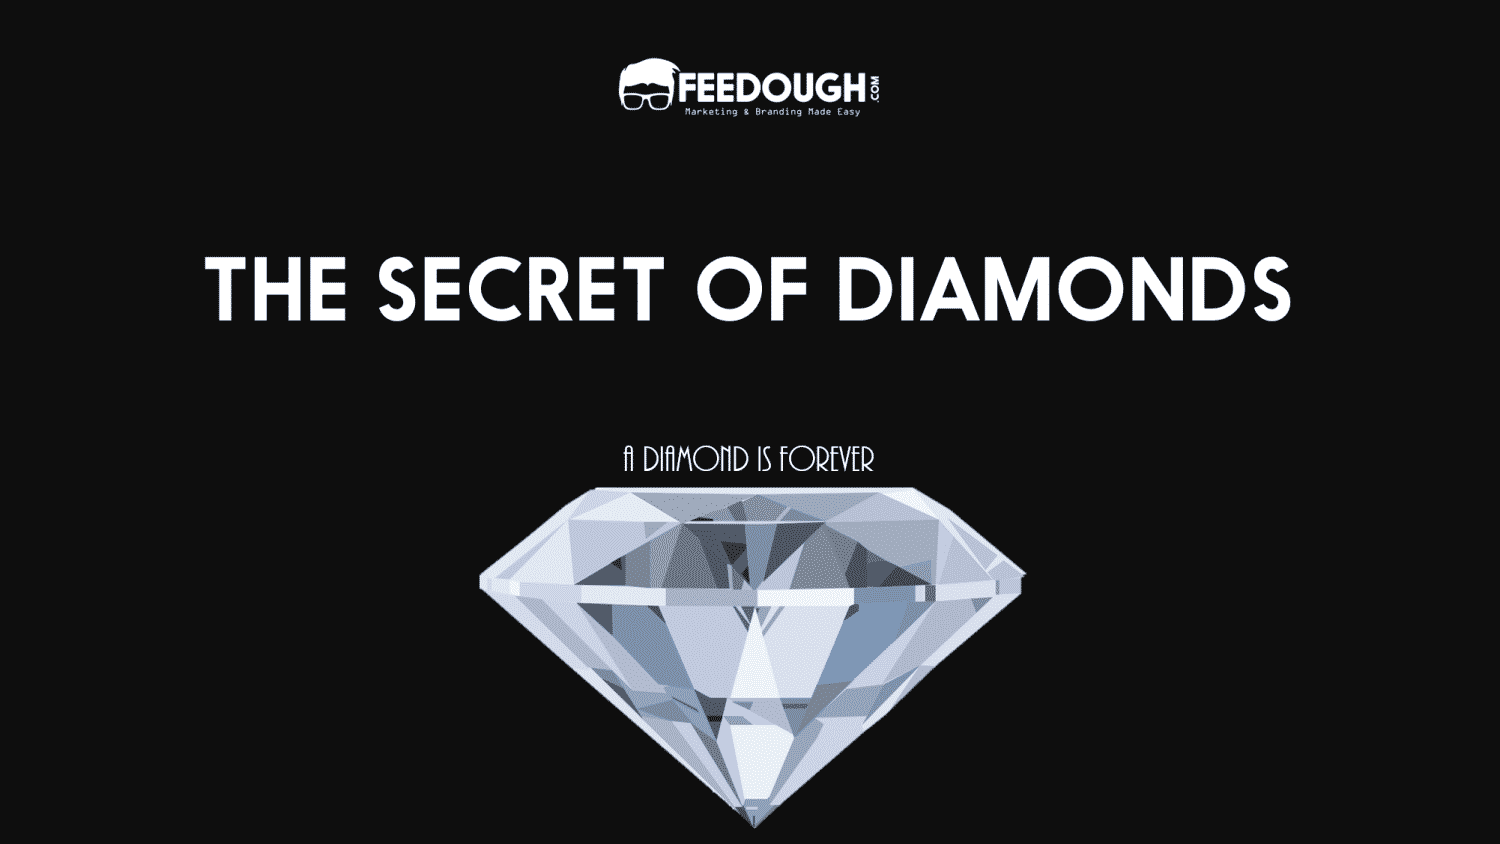 De Beers revives iconic diamond campaign